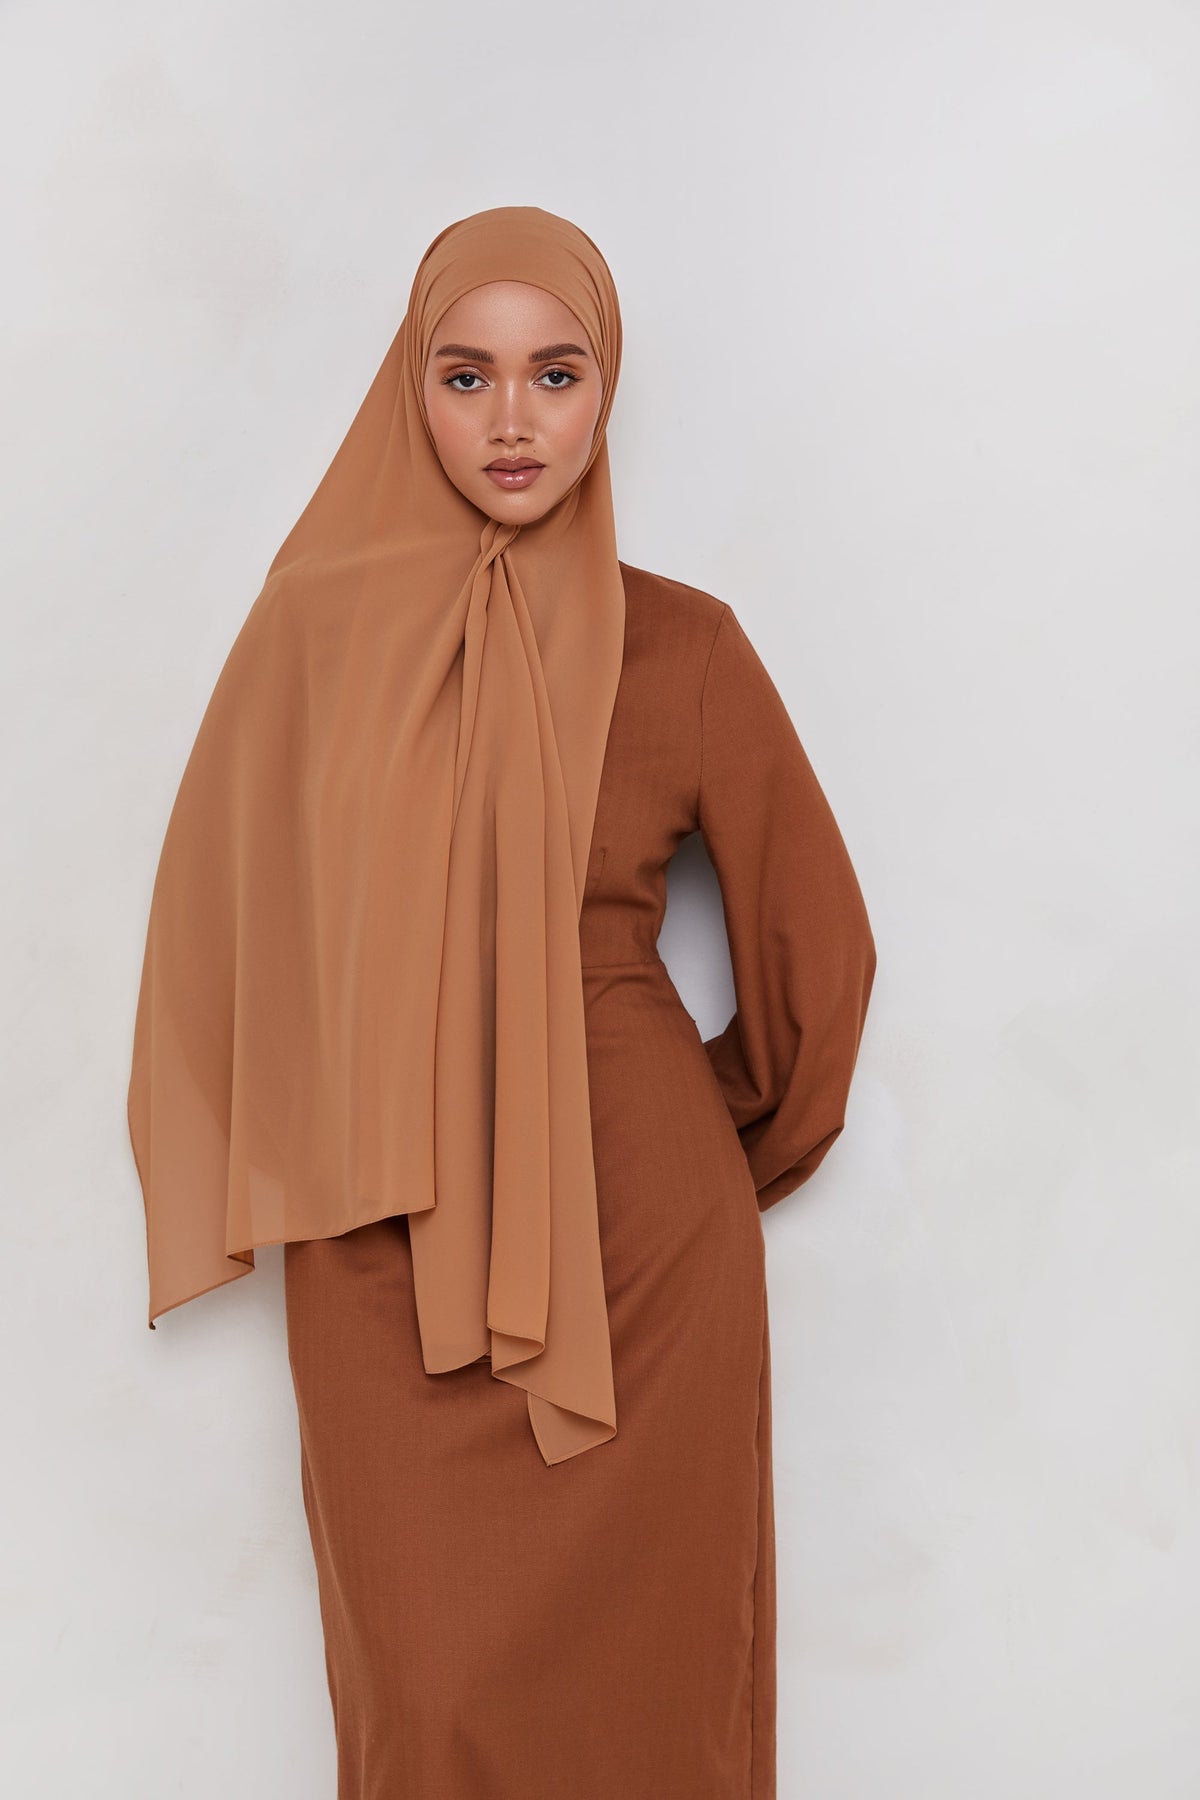 Chiffon LITE Hijab - Brown Sugar saigonodysseyhotel 